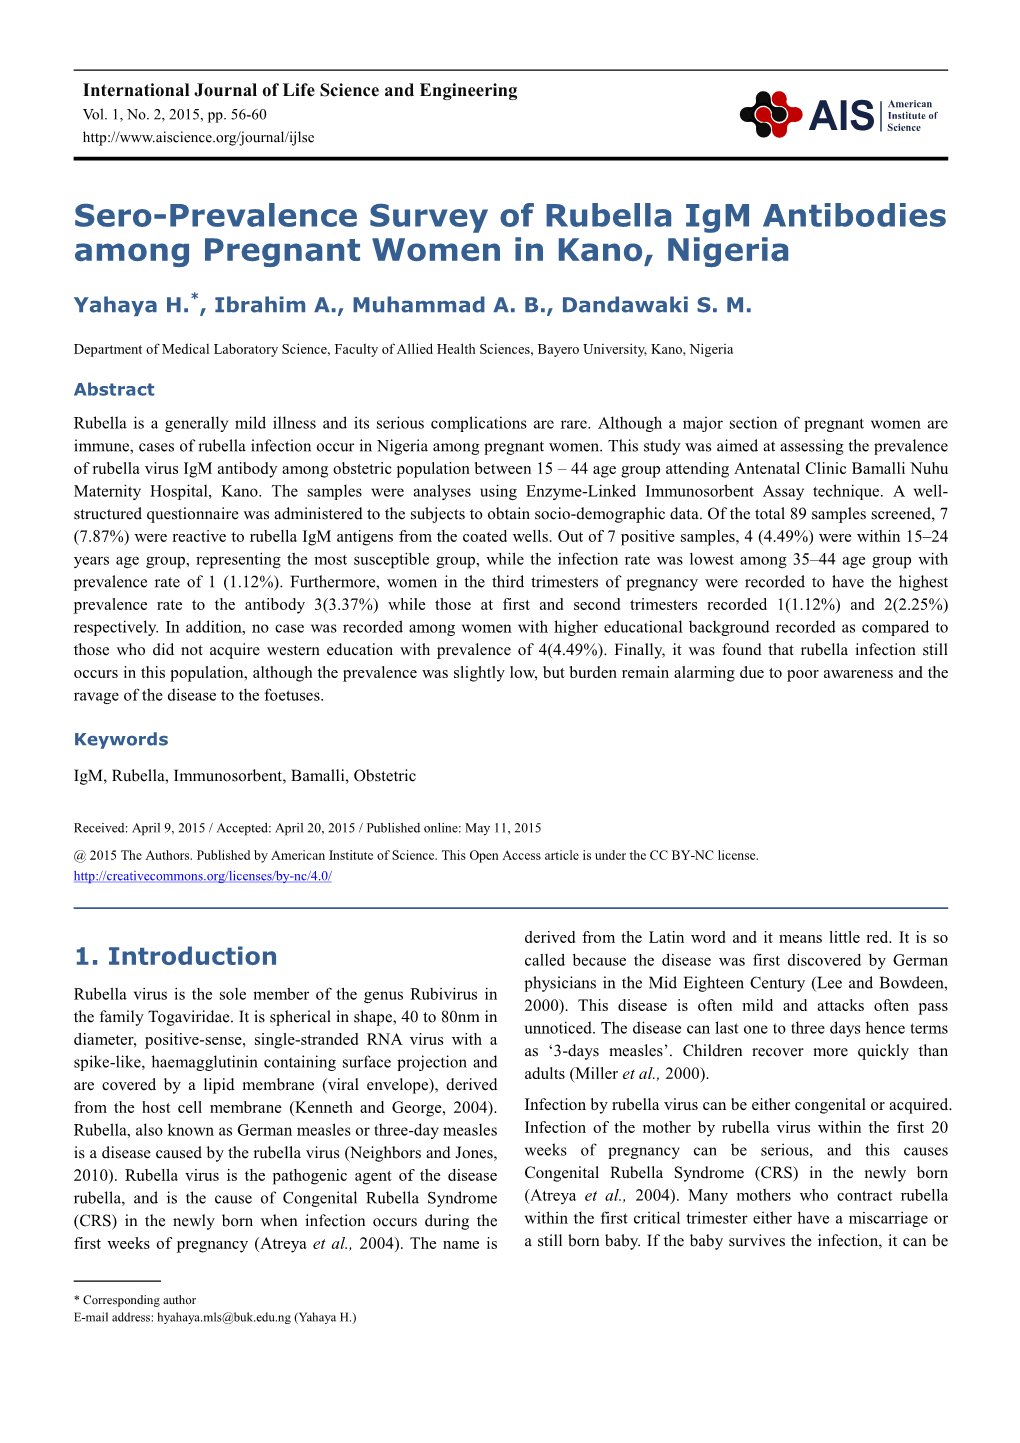 Sero-Prevalence Survey of Rubella Igm Antibodies Among Pregnant Women in Kano, Nigeria